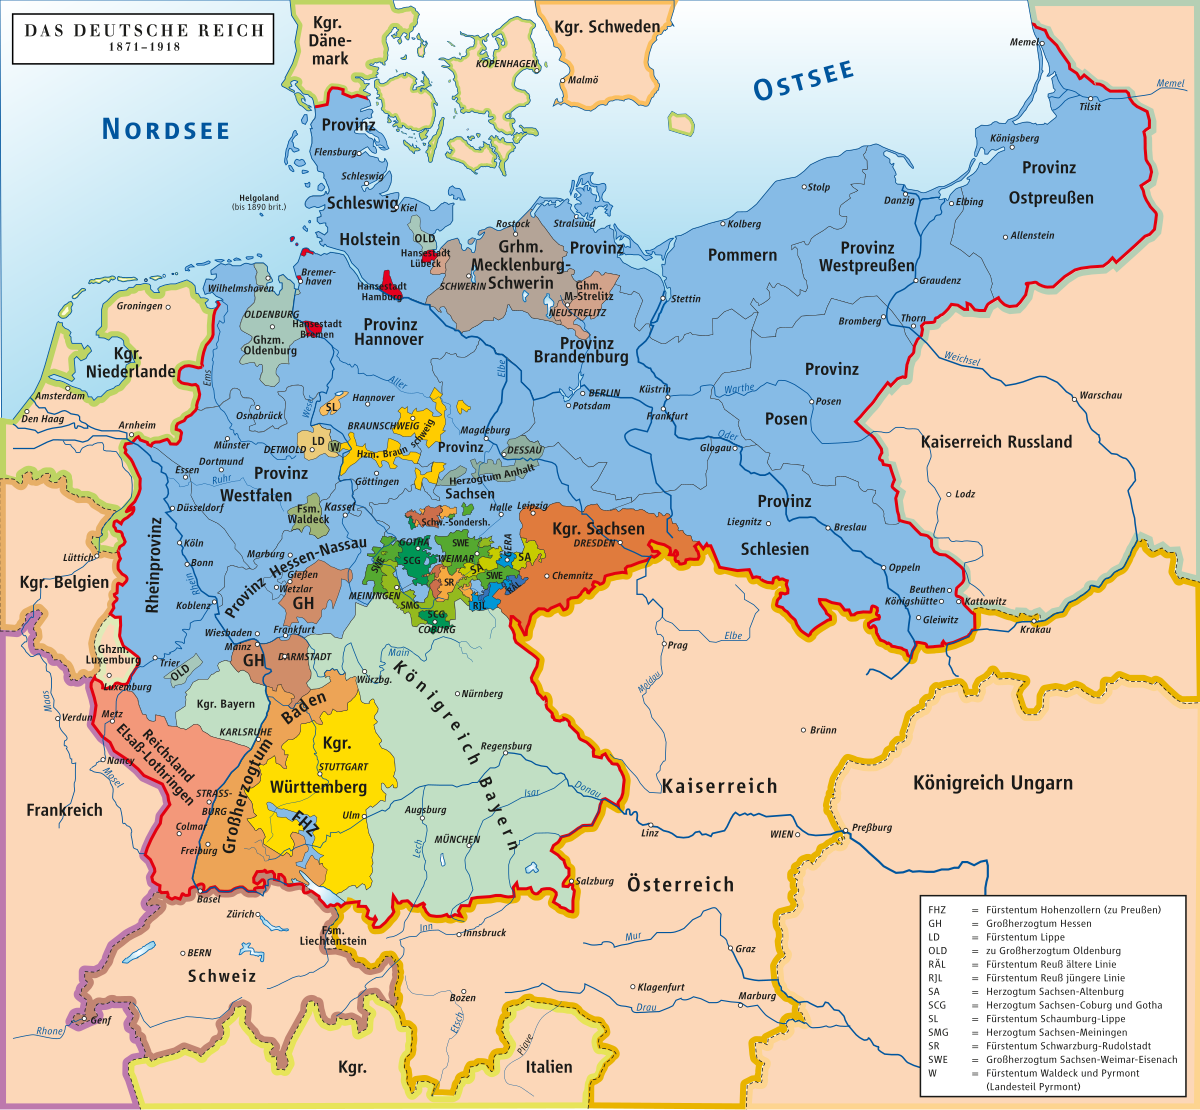 Reichsbürger movement - Wikipedia